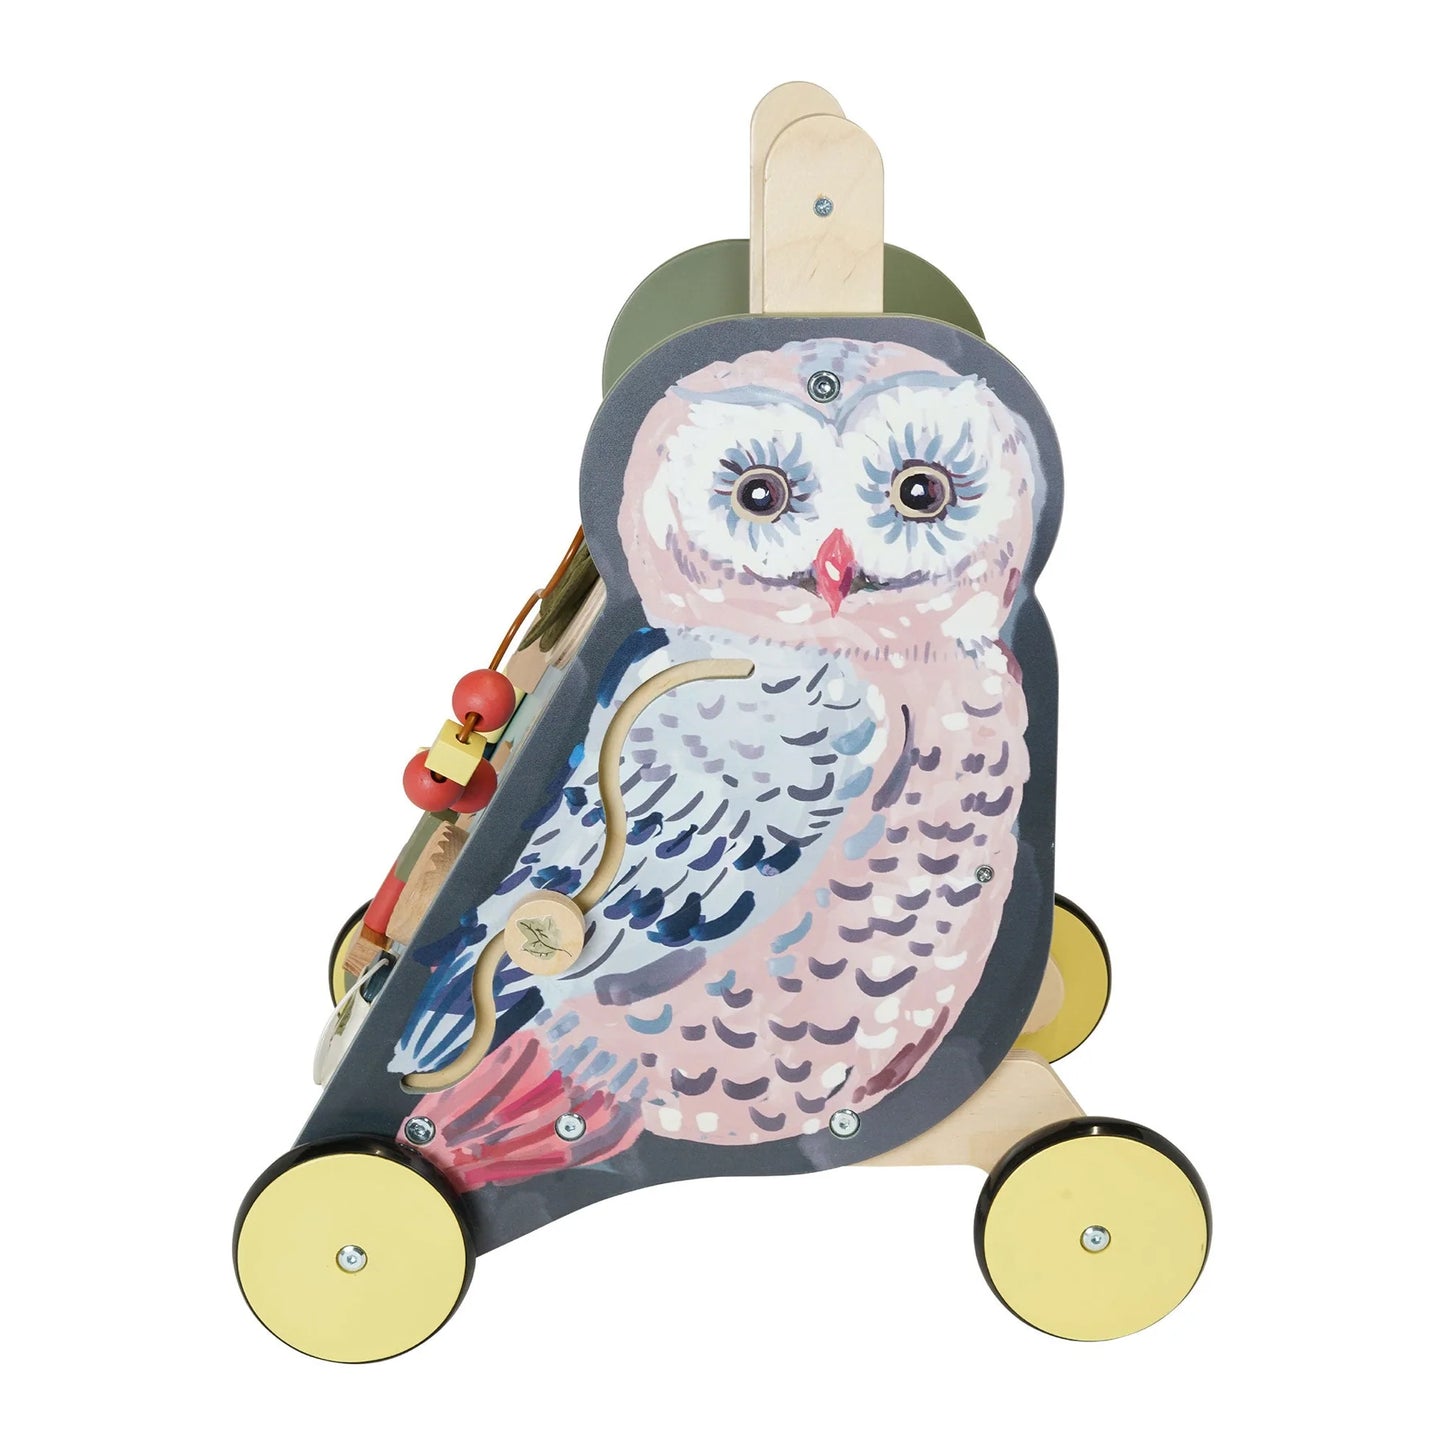 Wildwoods Owl Push-Cart by Manhattan Toy